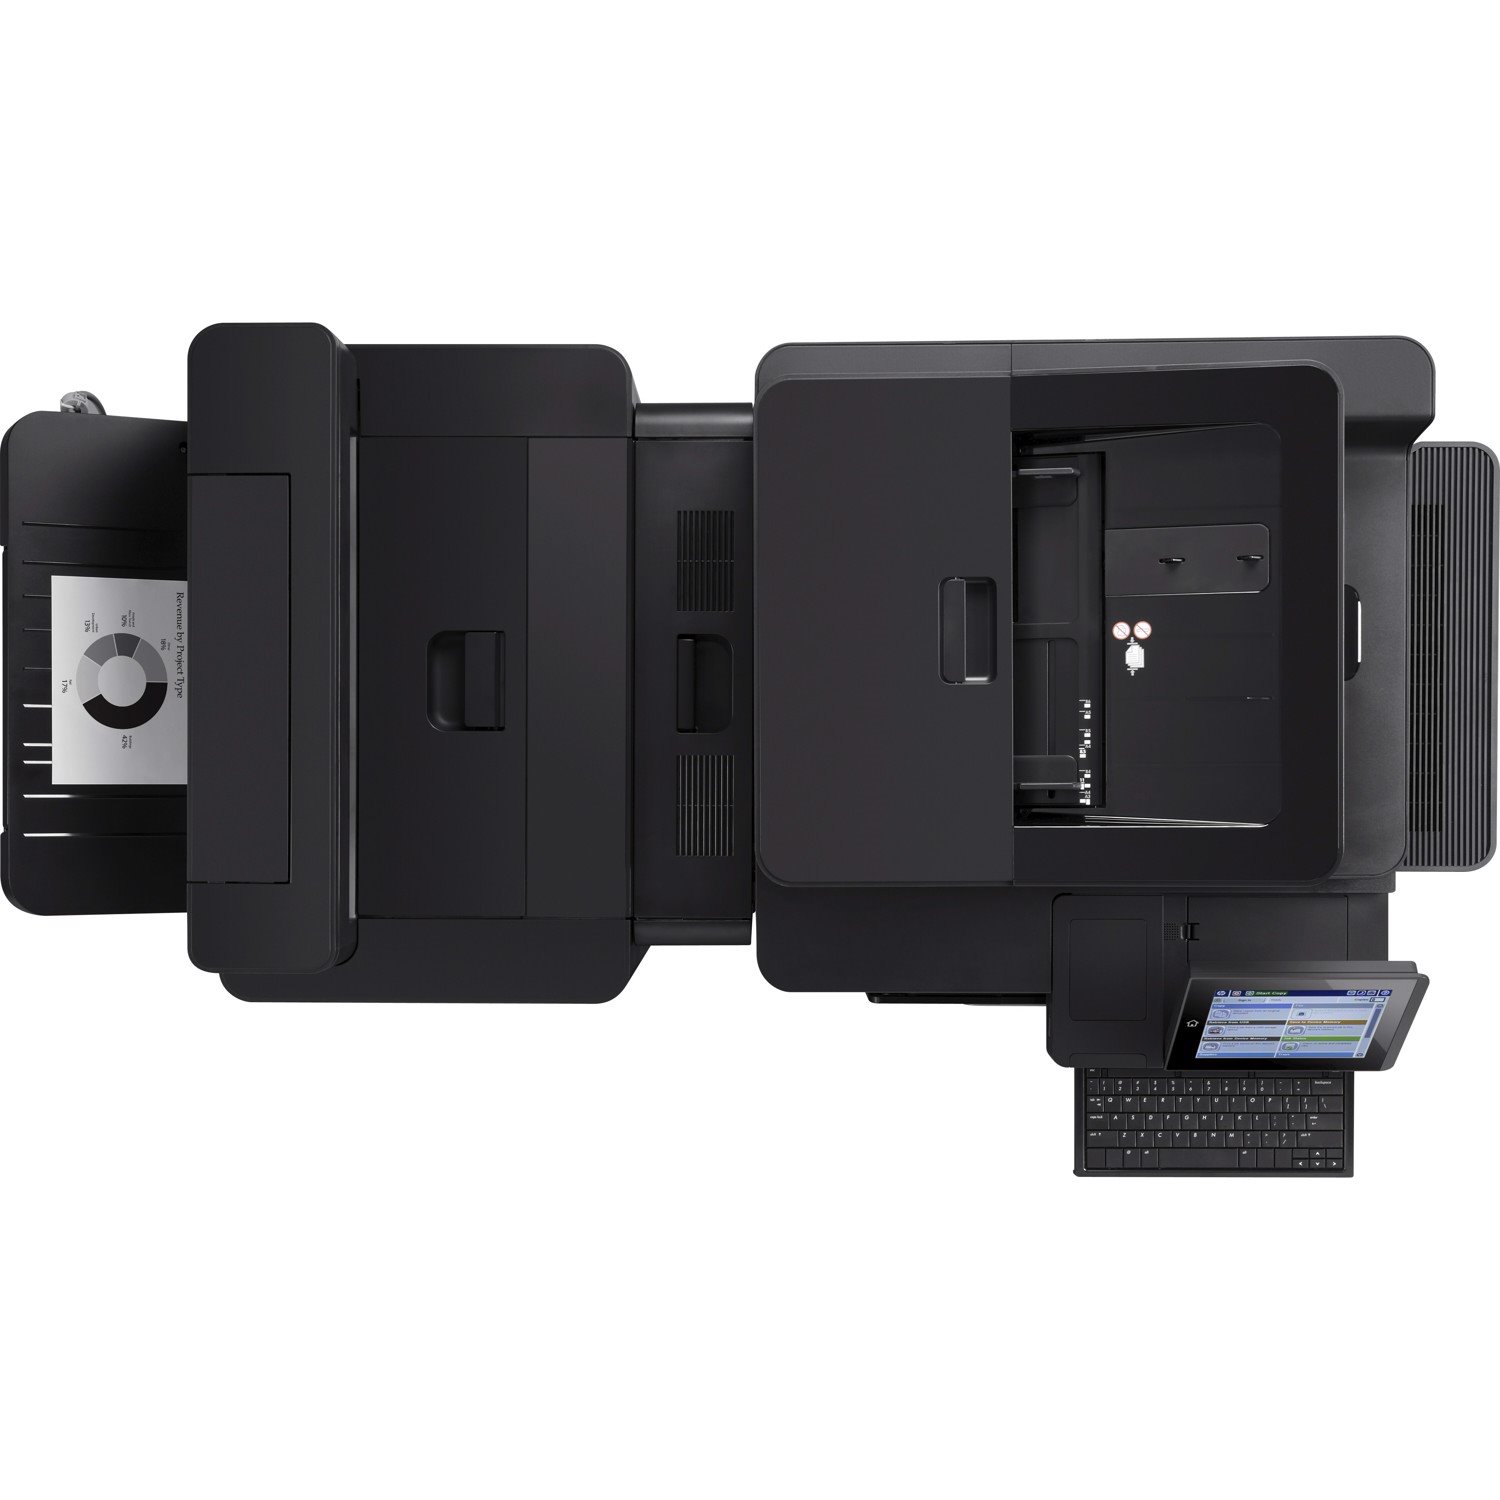 HP LaserJet M830Z Laser Multifunction Printer - Refurbished - Monochrome